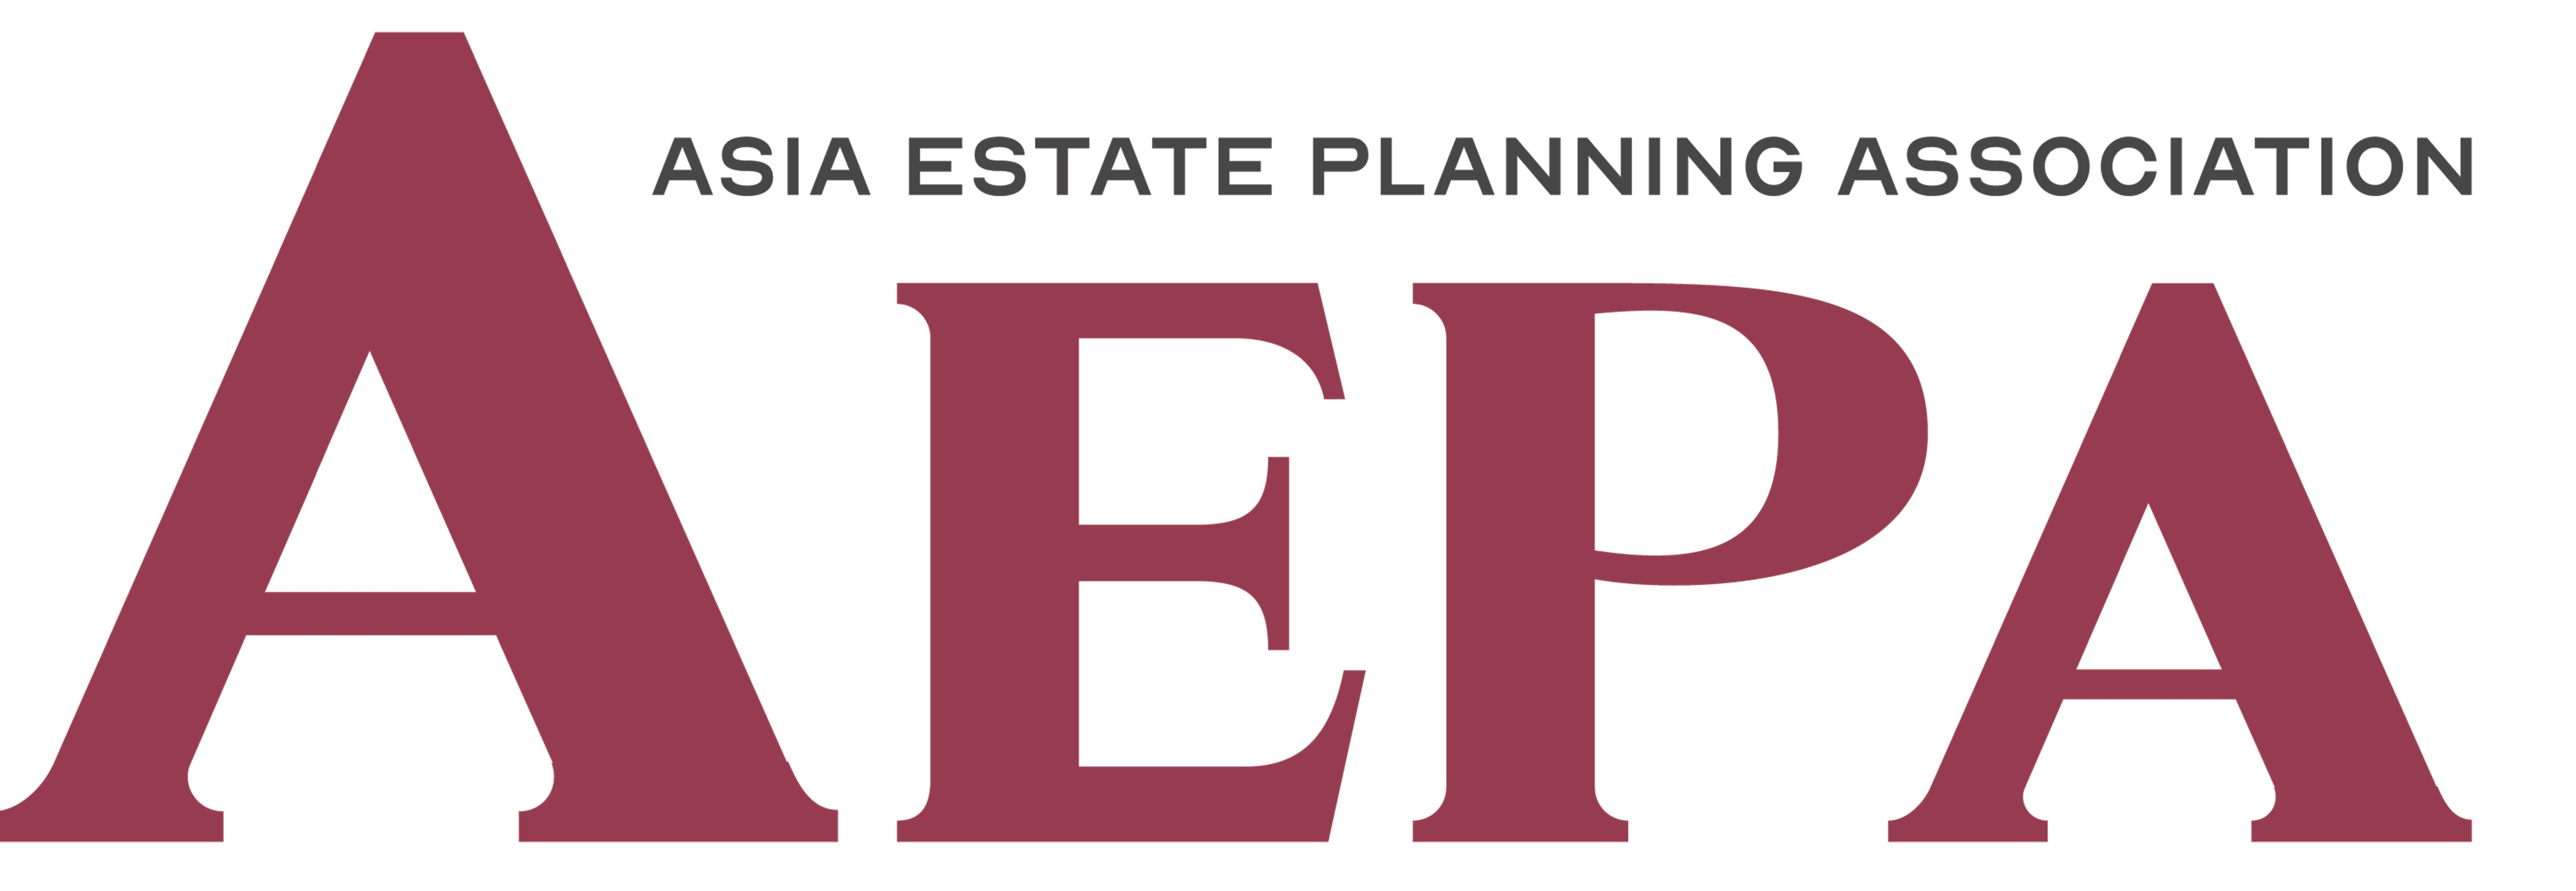 AEPA_Logo